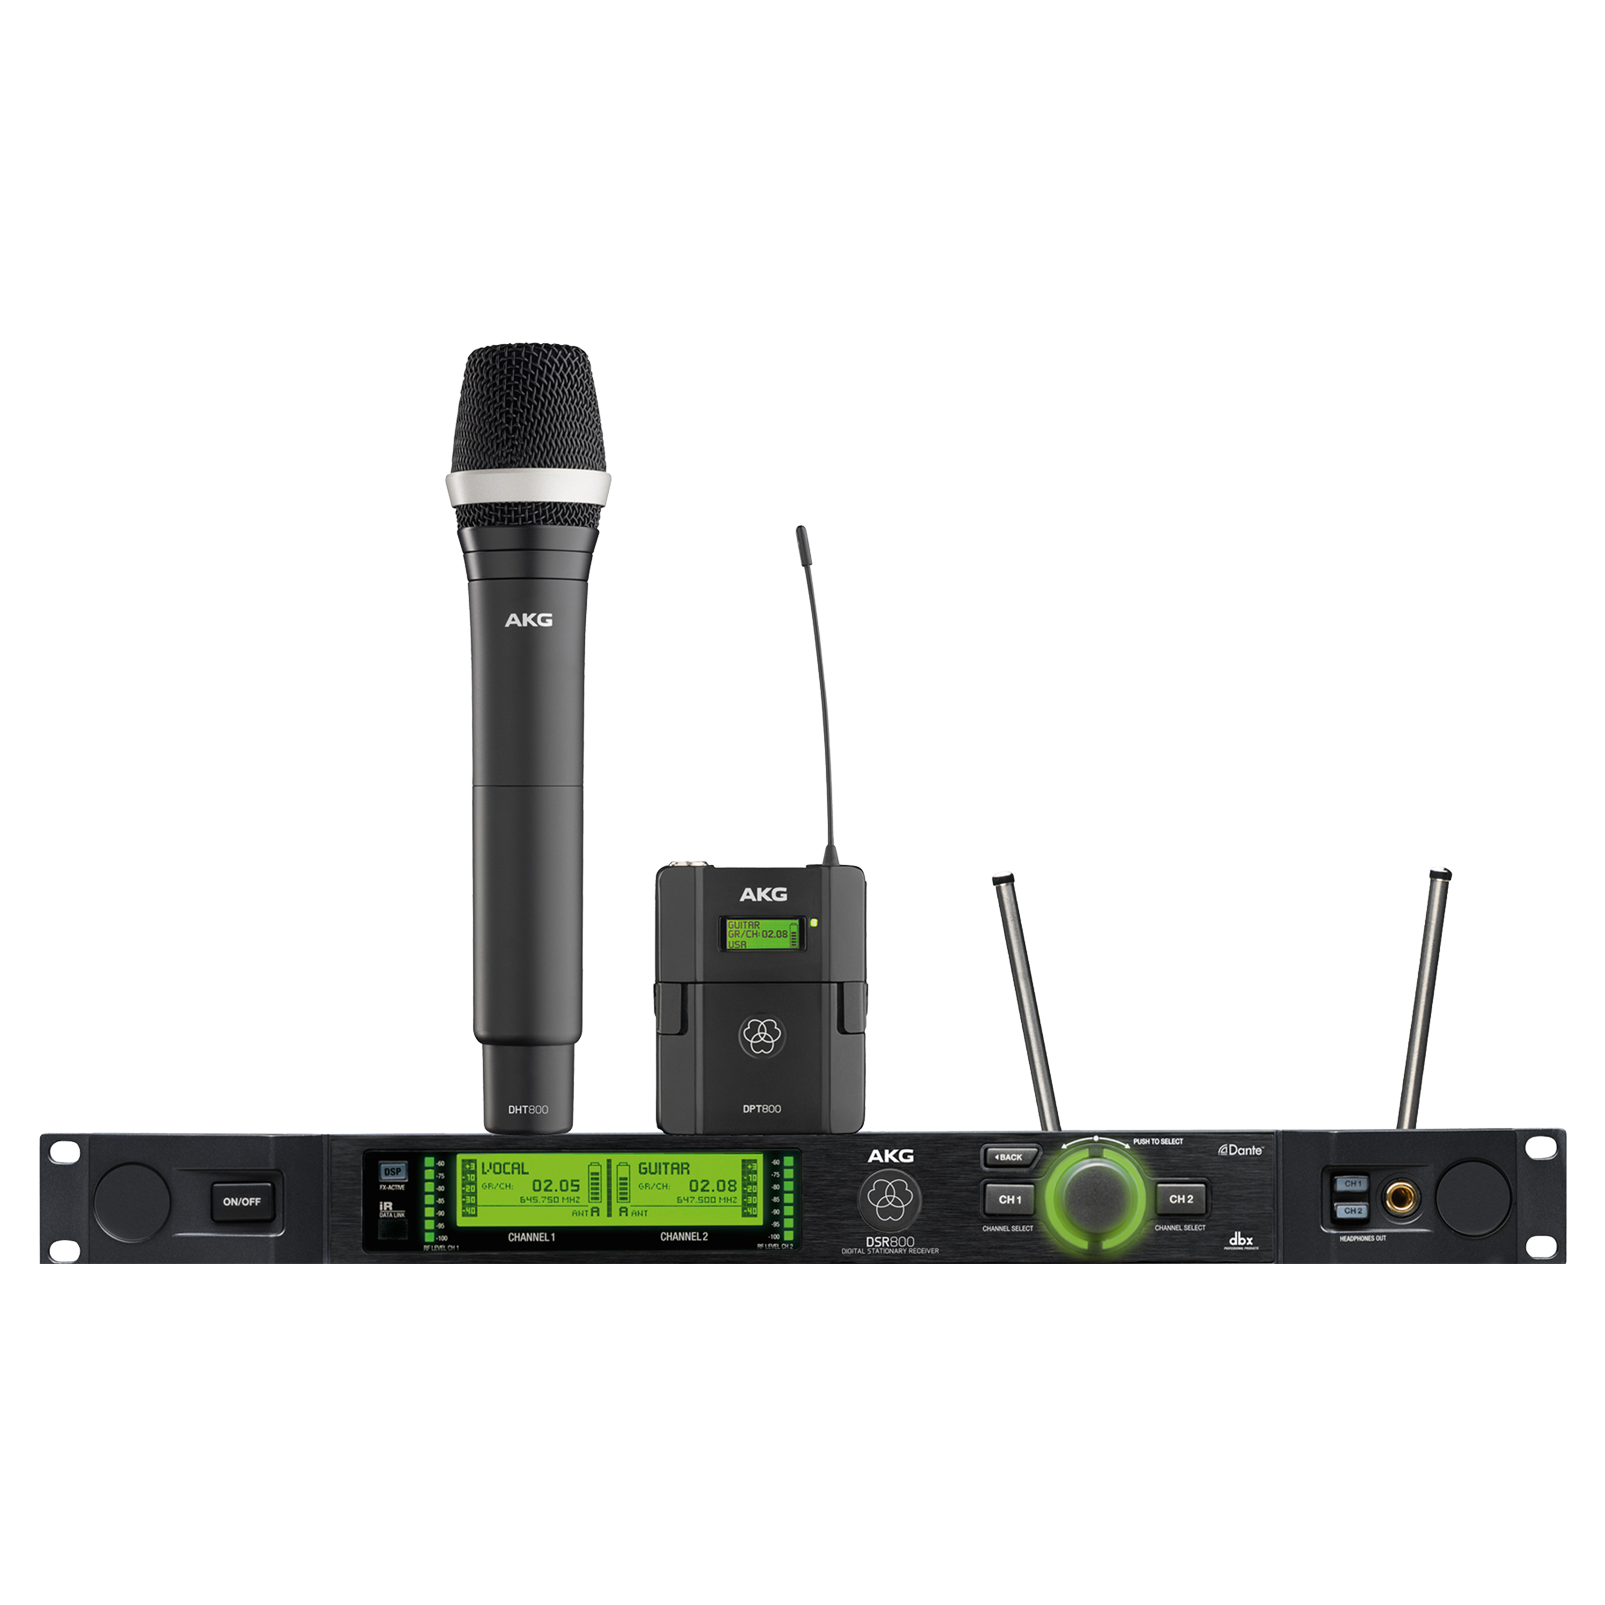 MICROFONO WIRELESS UHF dual system per AKG Wireless mic set con custodia 